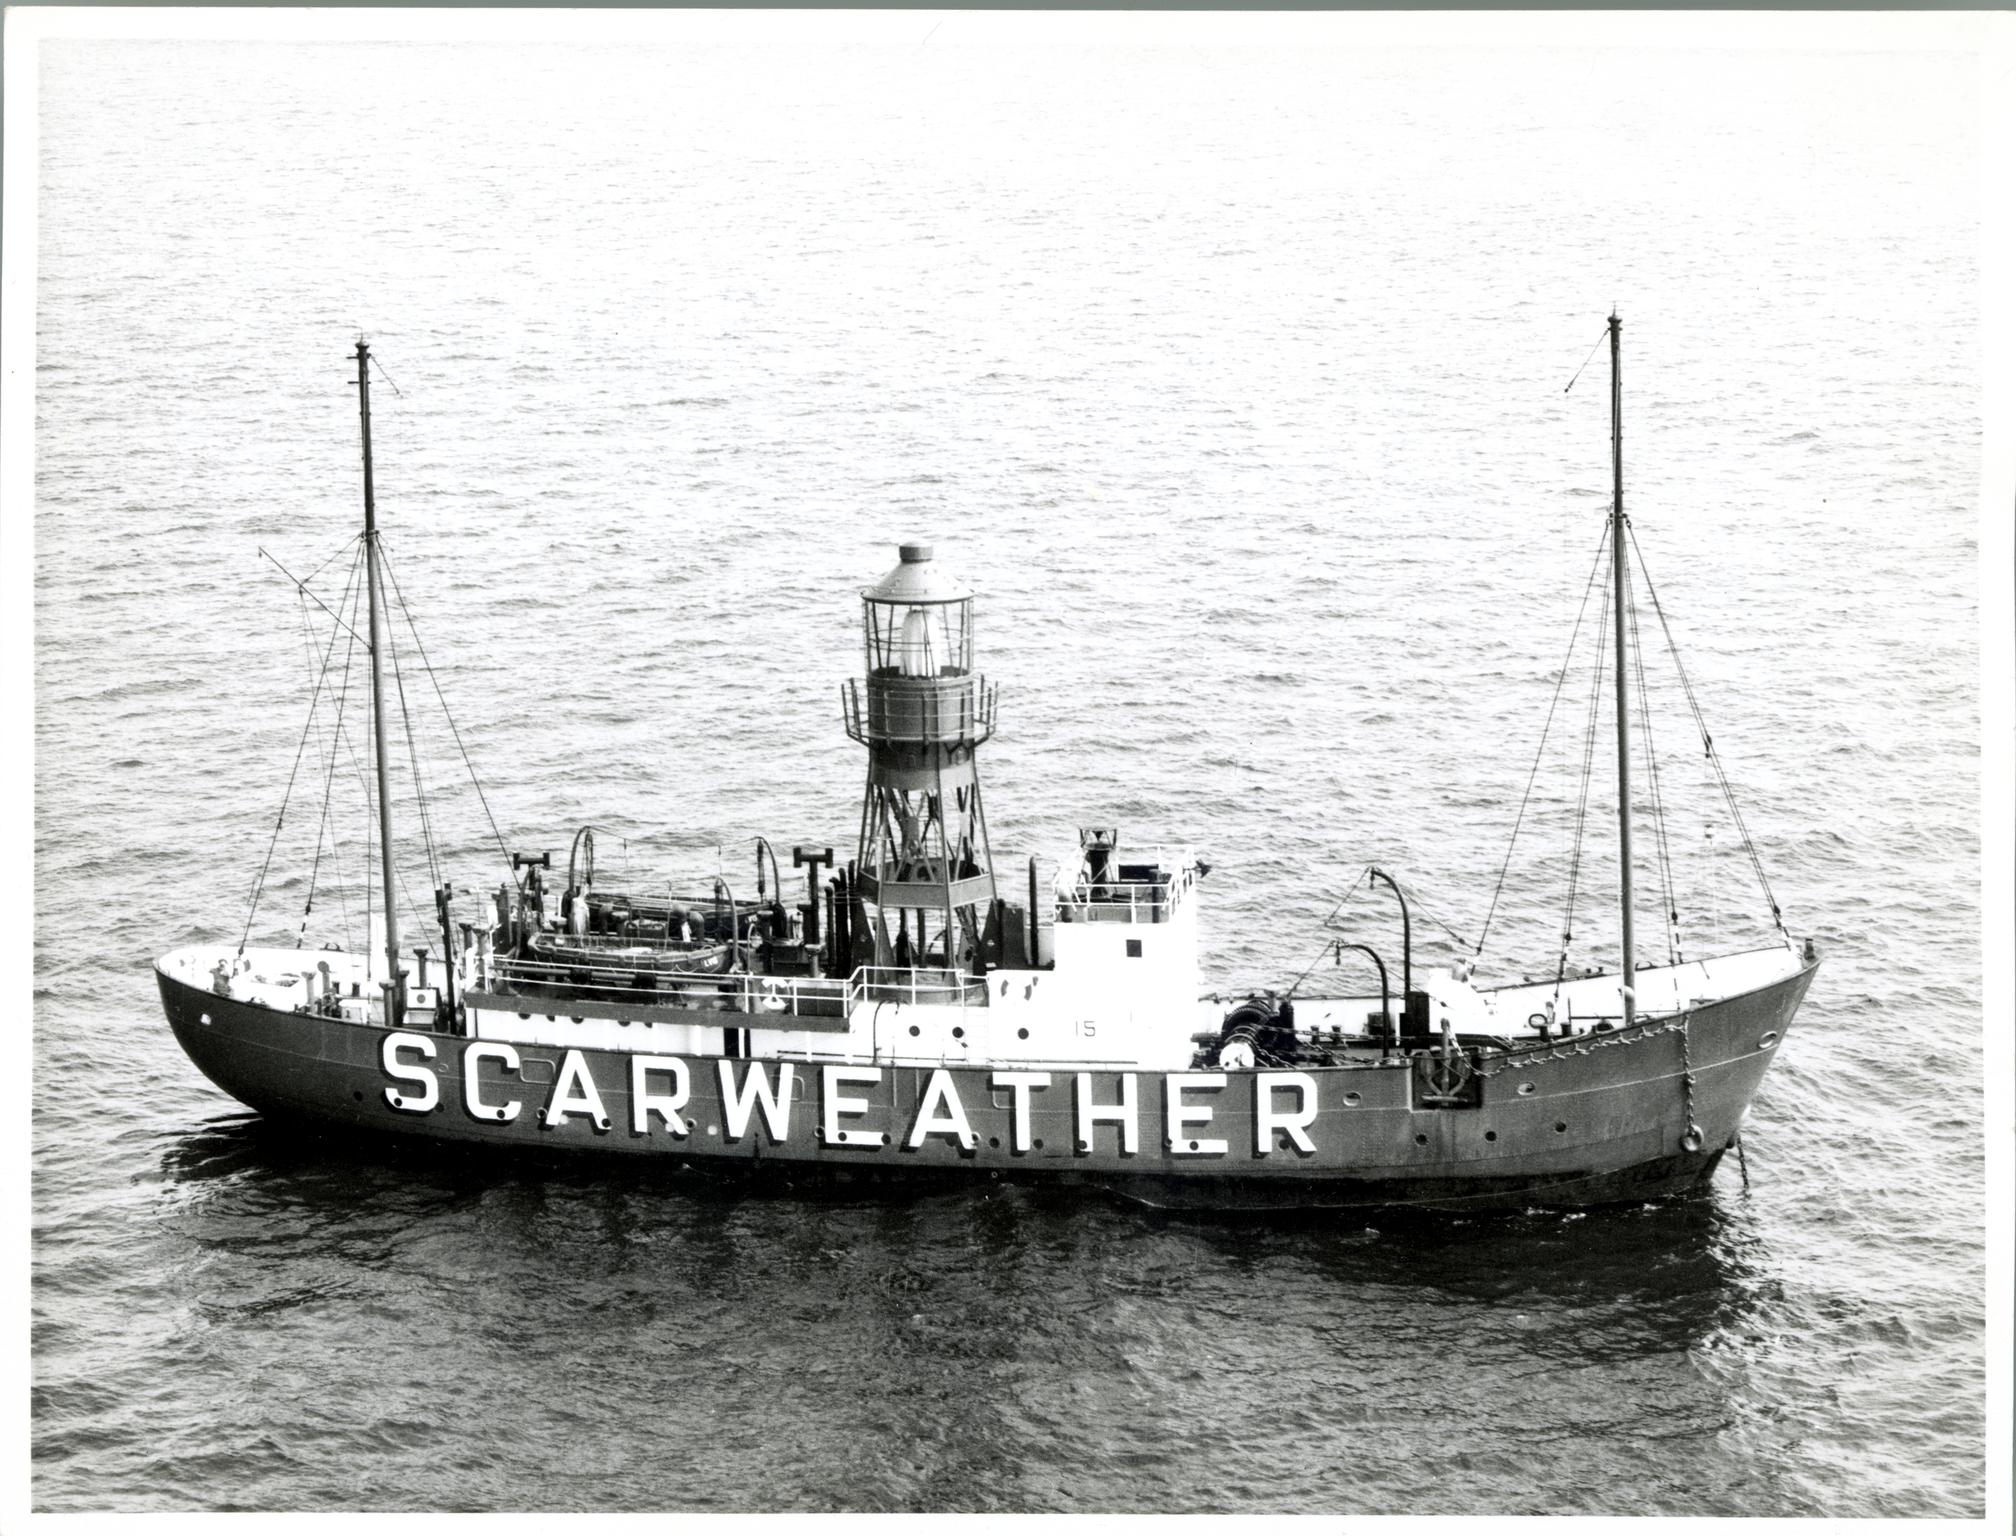 SCARWEATHER light vessel, photograph